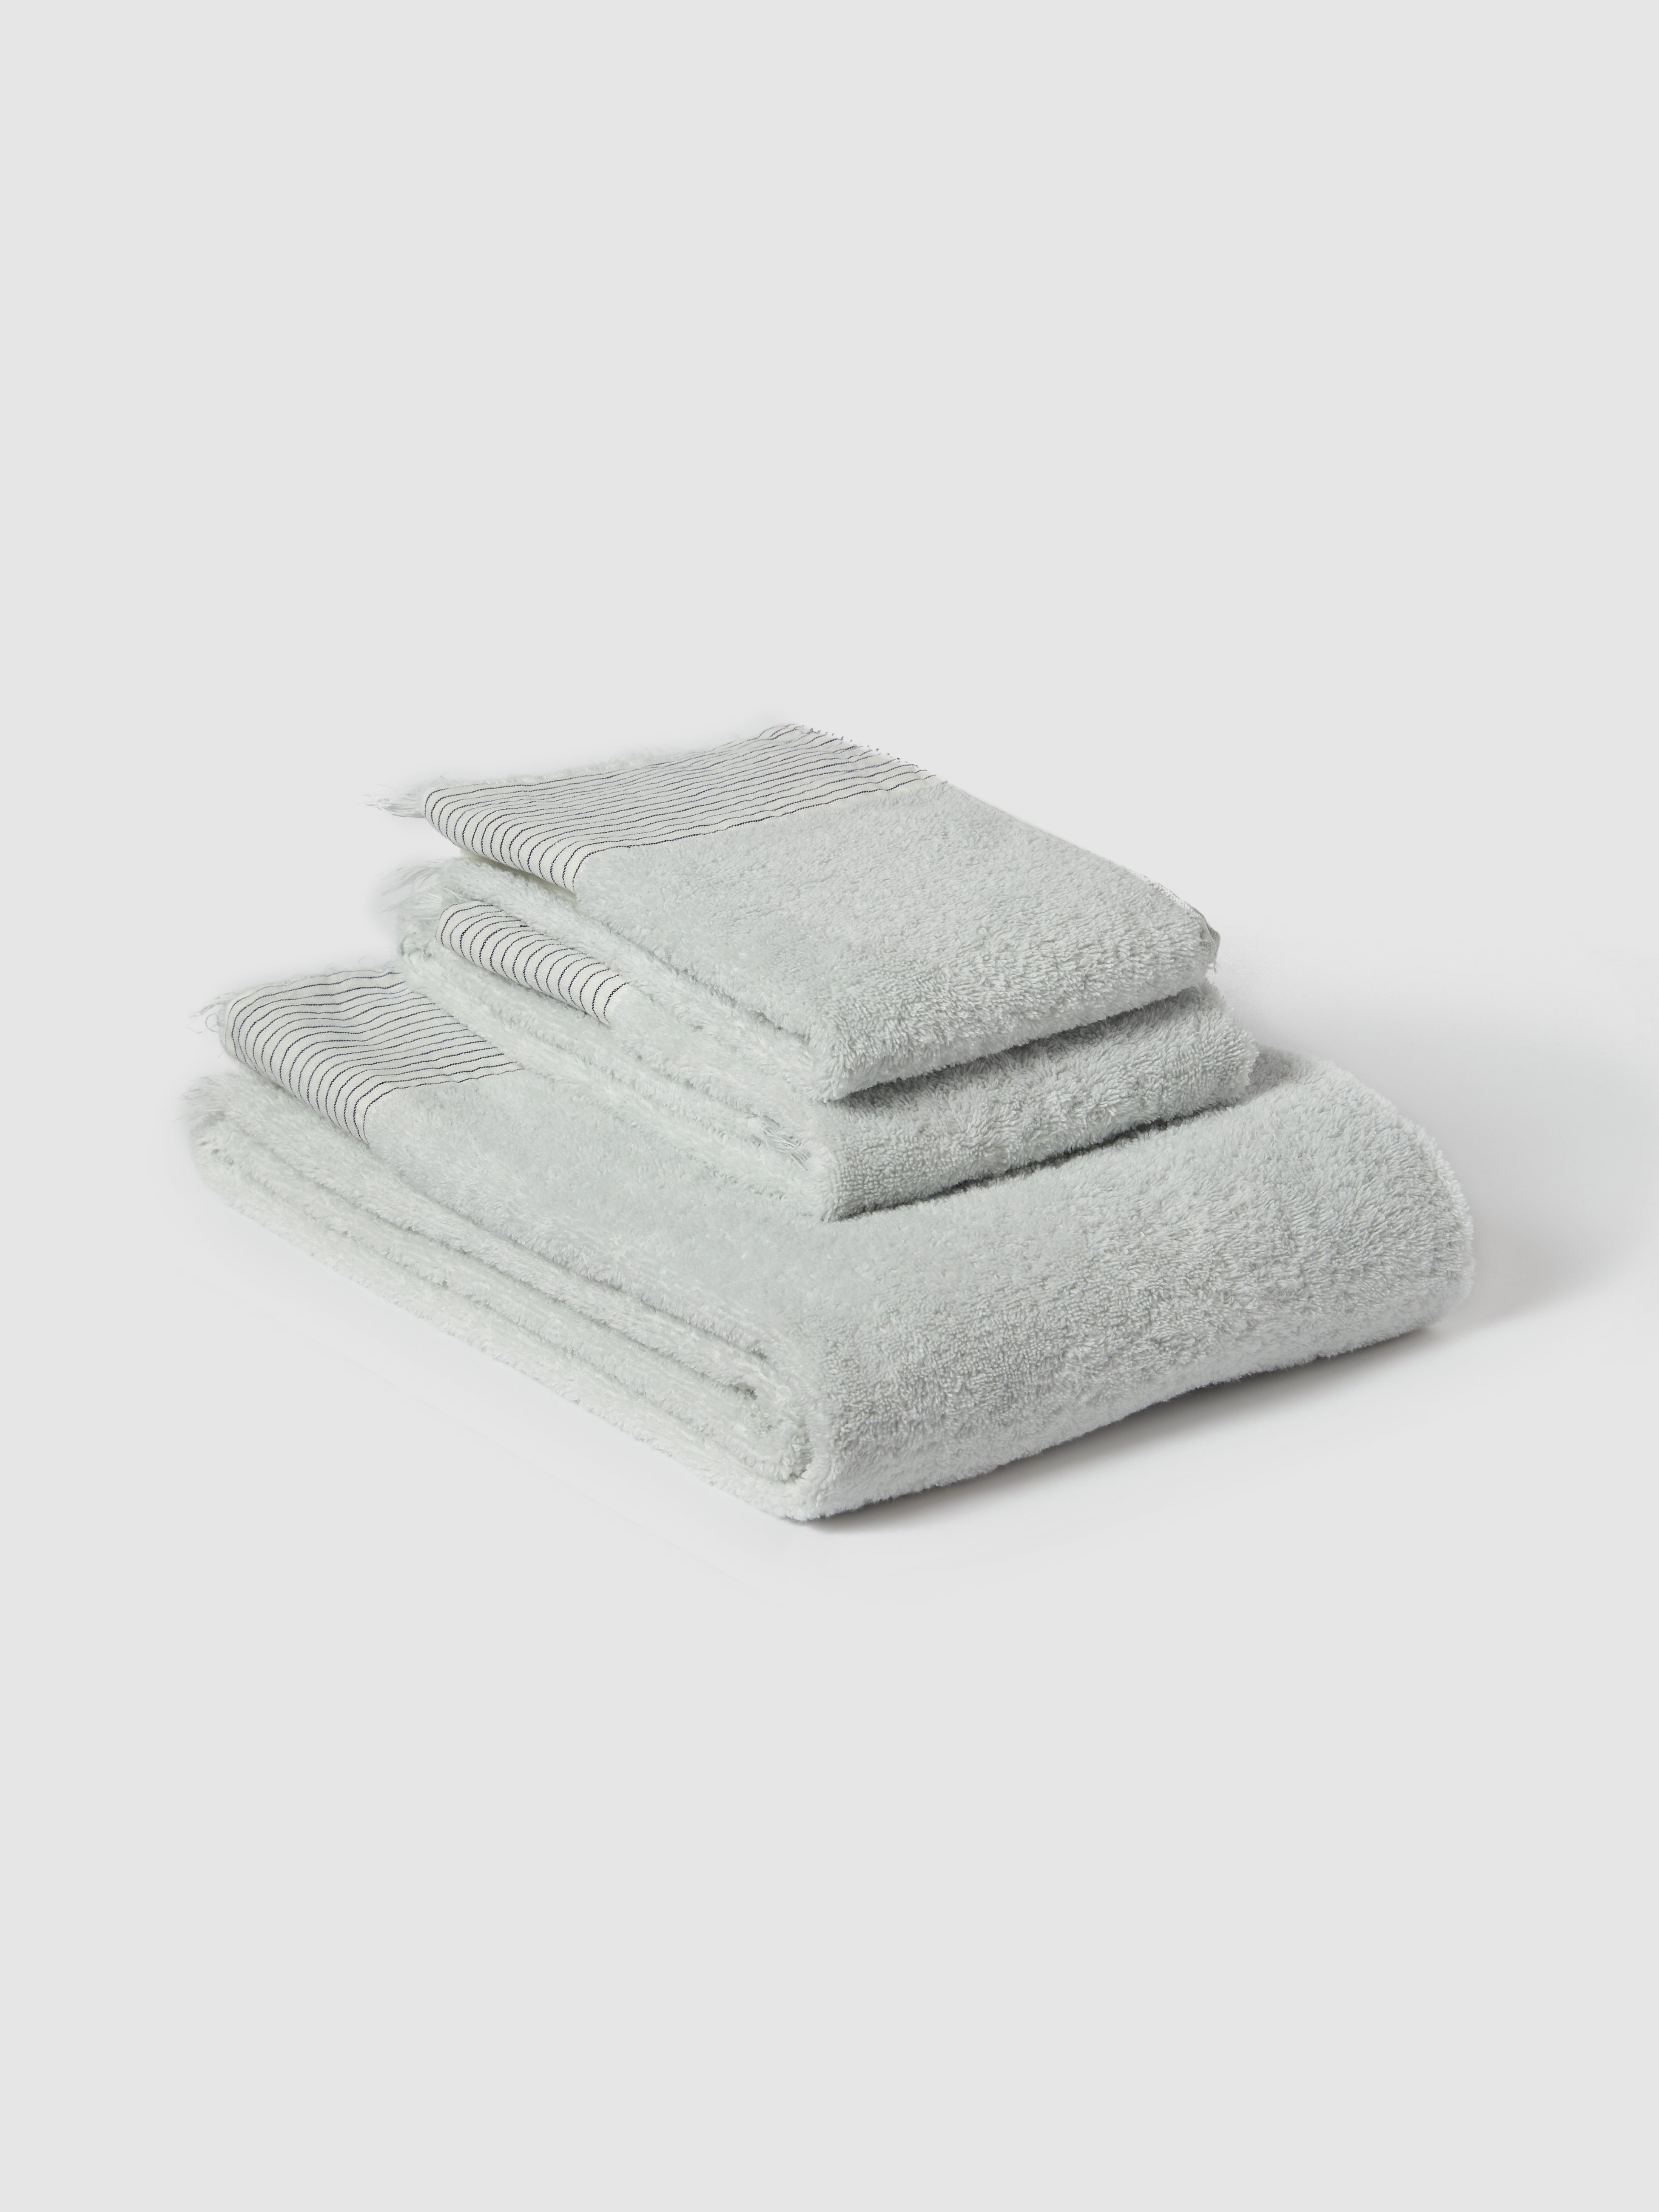 buy bath towels online